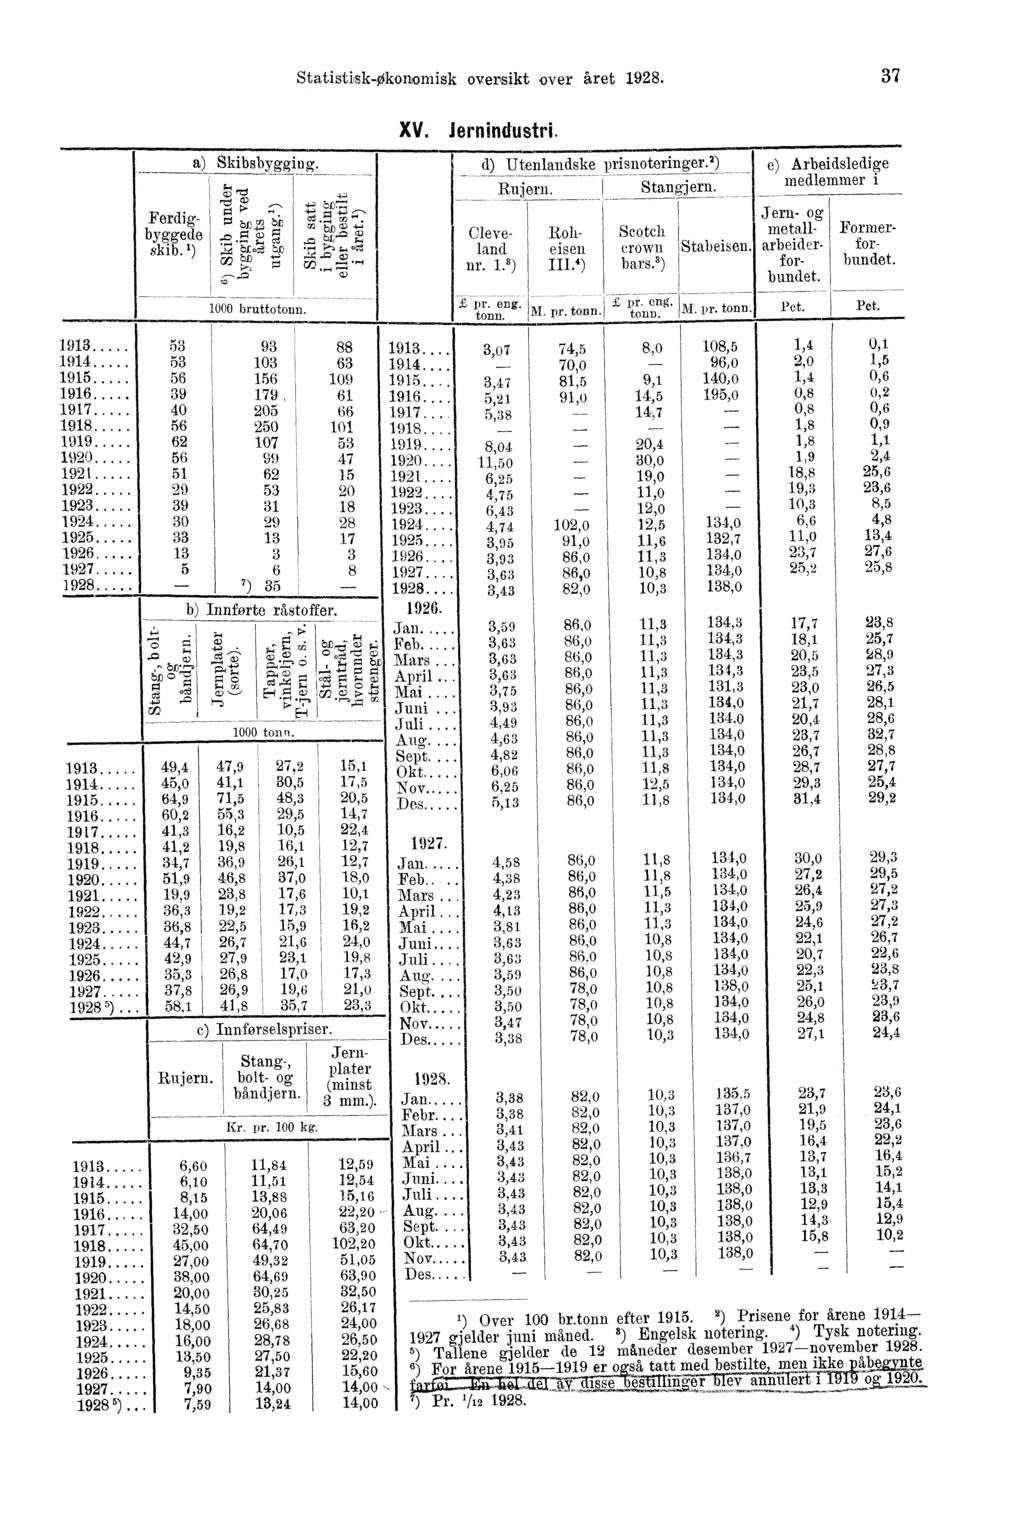 Statistisk-Okonomisk oversikt over Aret 1928. 37 a) Skibsbyggit)0.. ;-4 a) '171 -,.,-tt bk:-.-2, Ferdig- r.c t,10,a).., byggede,.,,,.;:11:3 u.' 4 skib. 1) 'Z.' bfot- tki),-.,.., oca x bp '''' )24,sz ci, r.